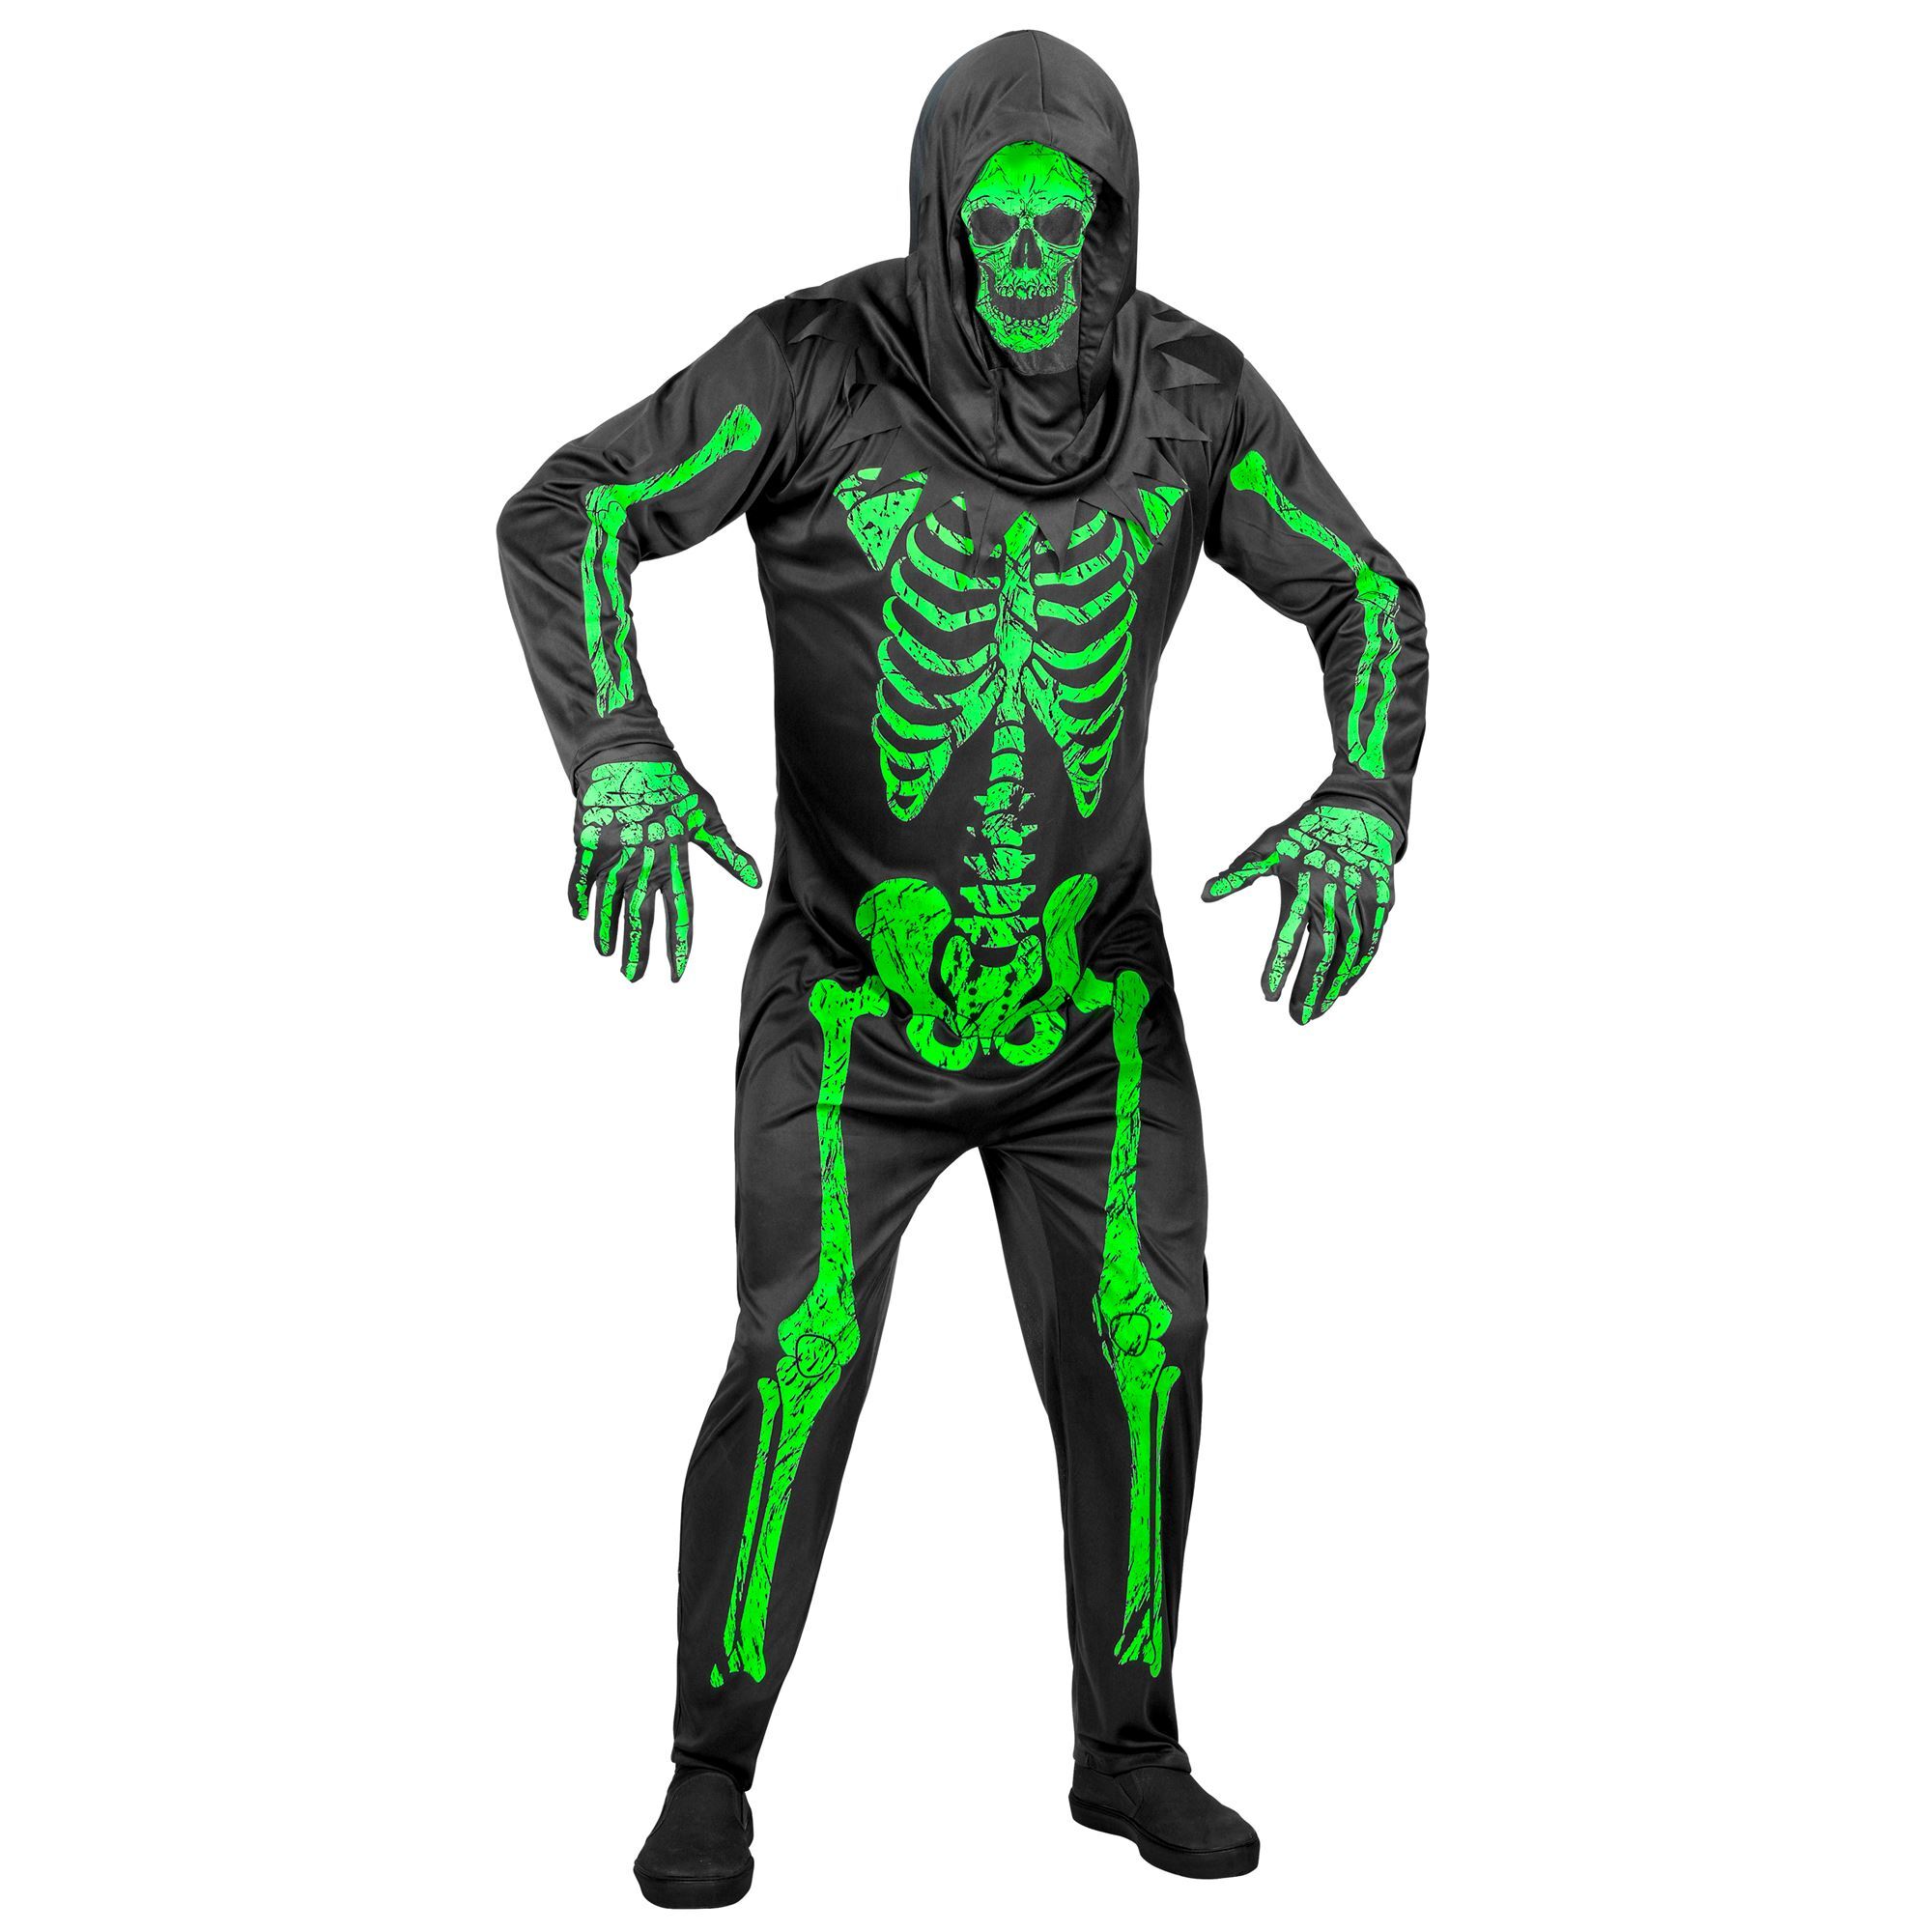 Giftig neon groen beangstigend skelet kostuum man